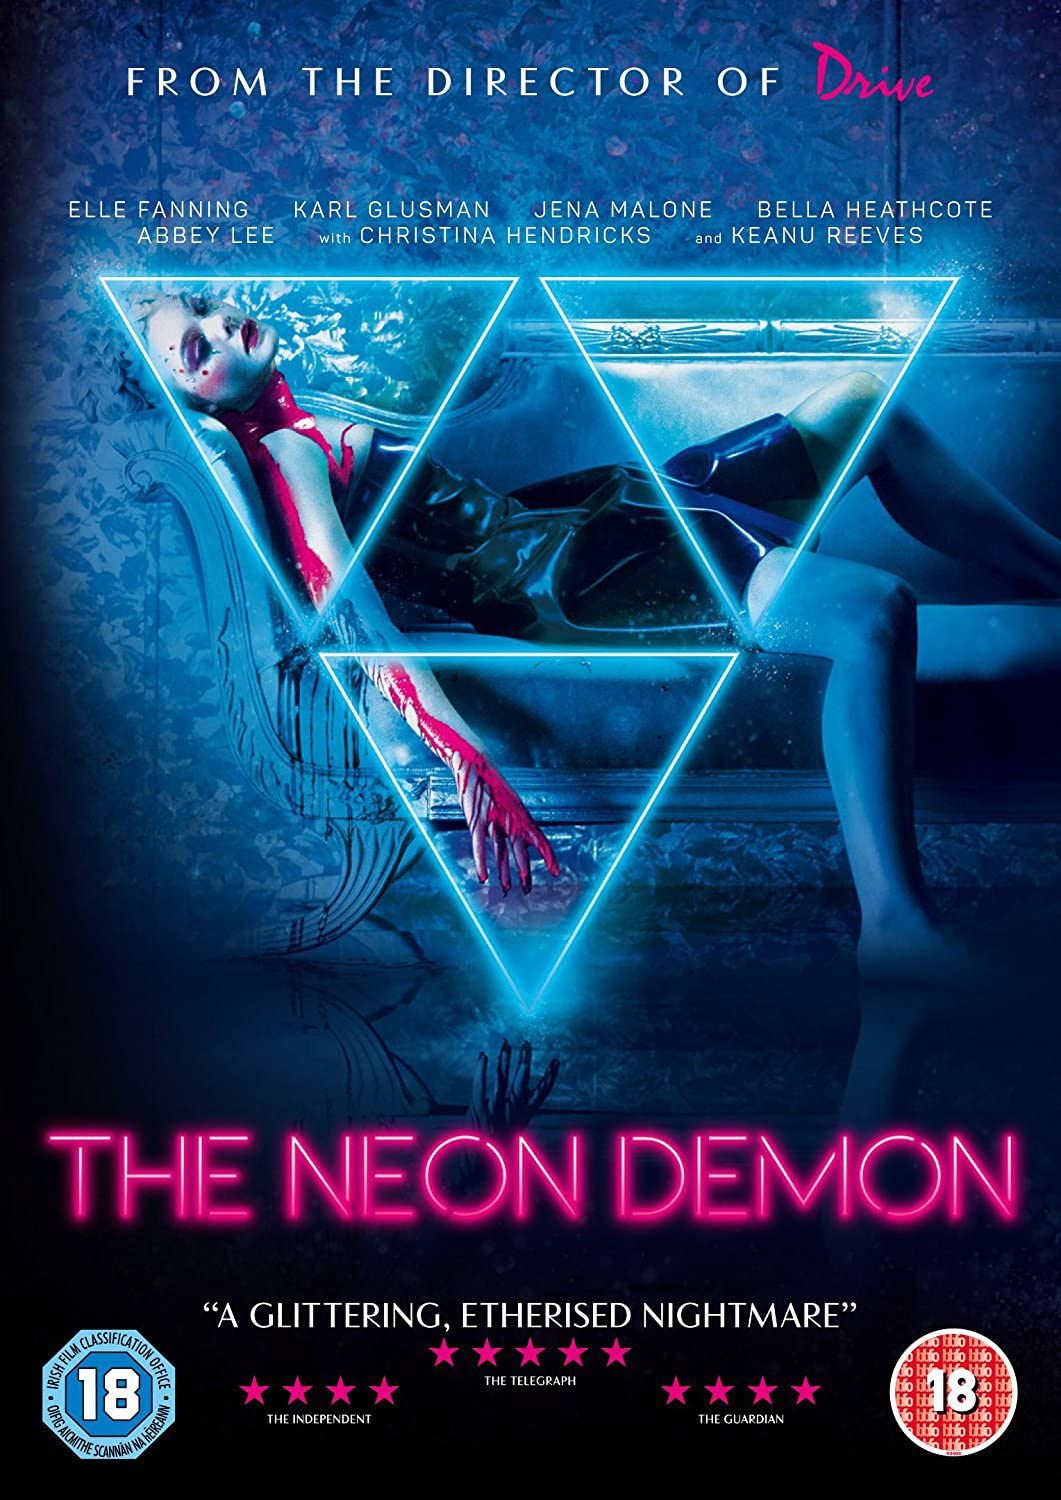 The Neon Demon [2017] – Horror/Thriller [DVD]